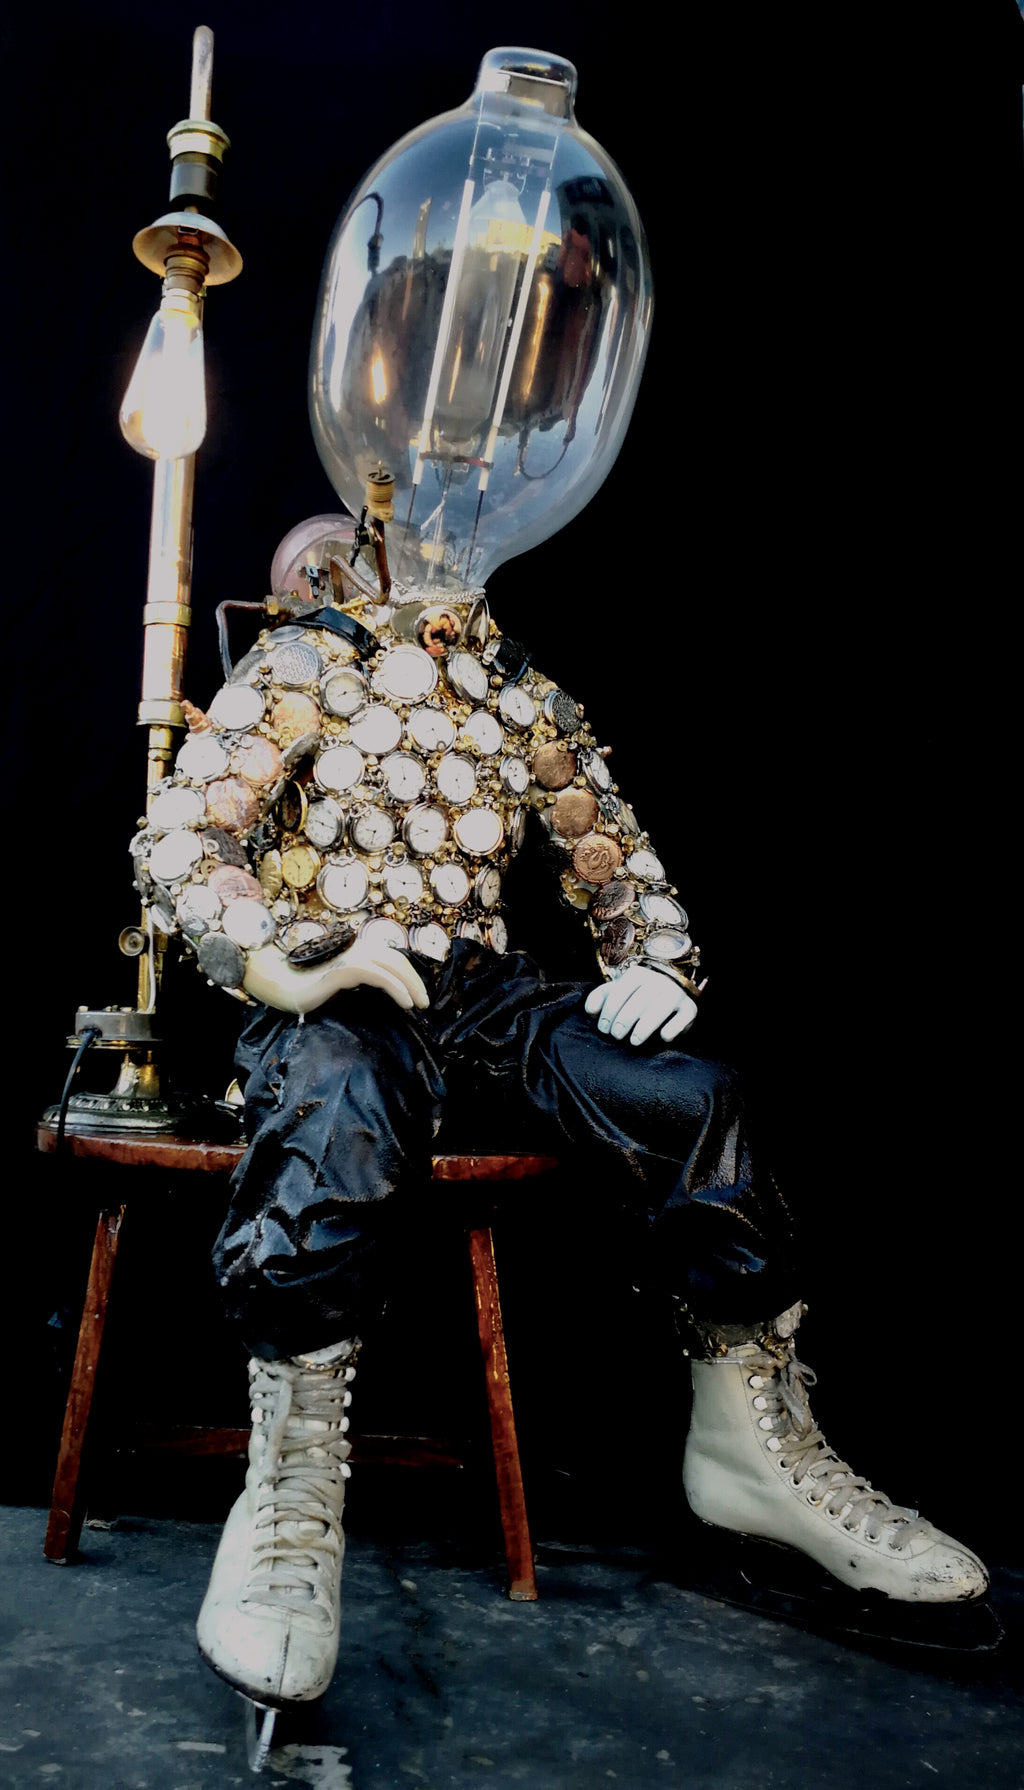 Steampunk manikin boy with pocket watch detail light front view